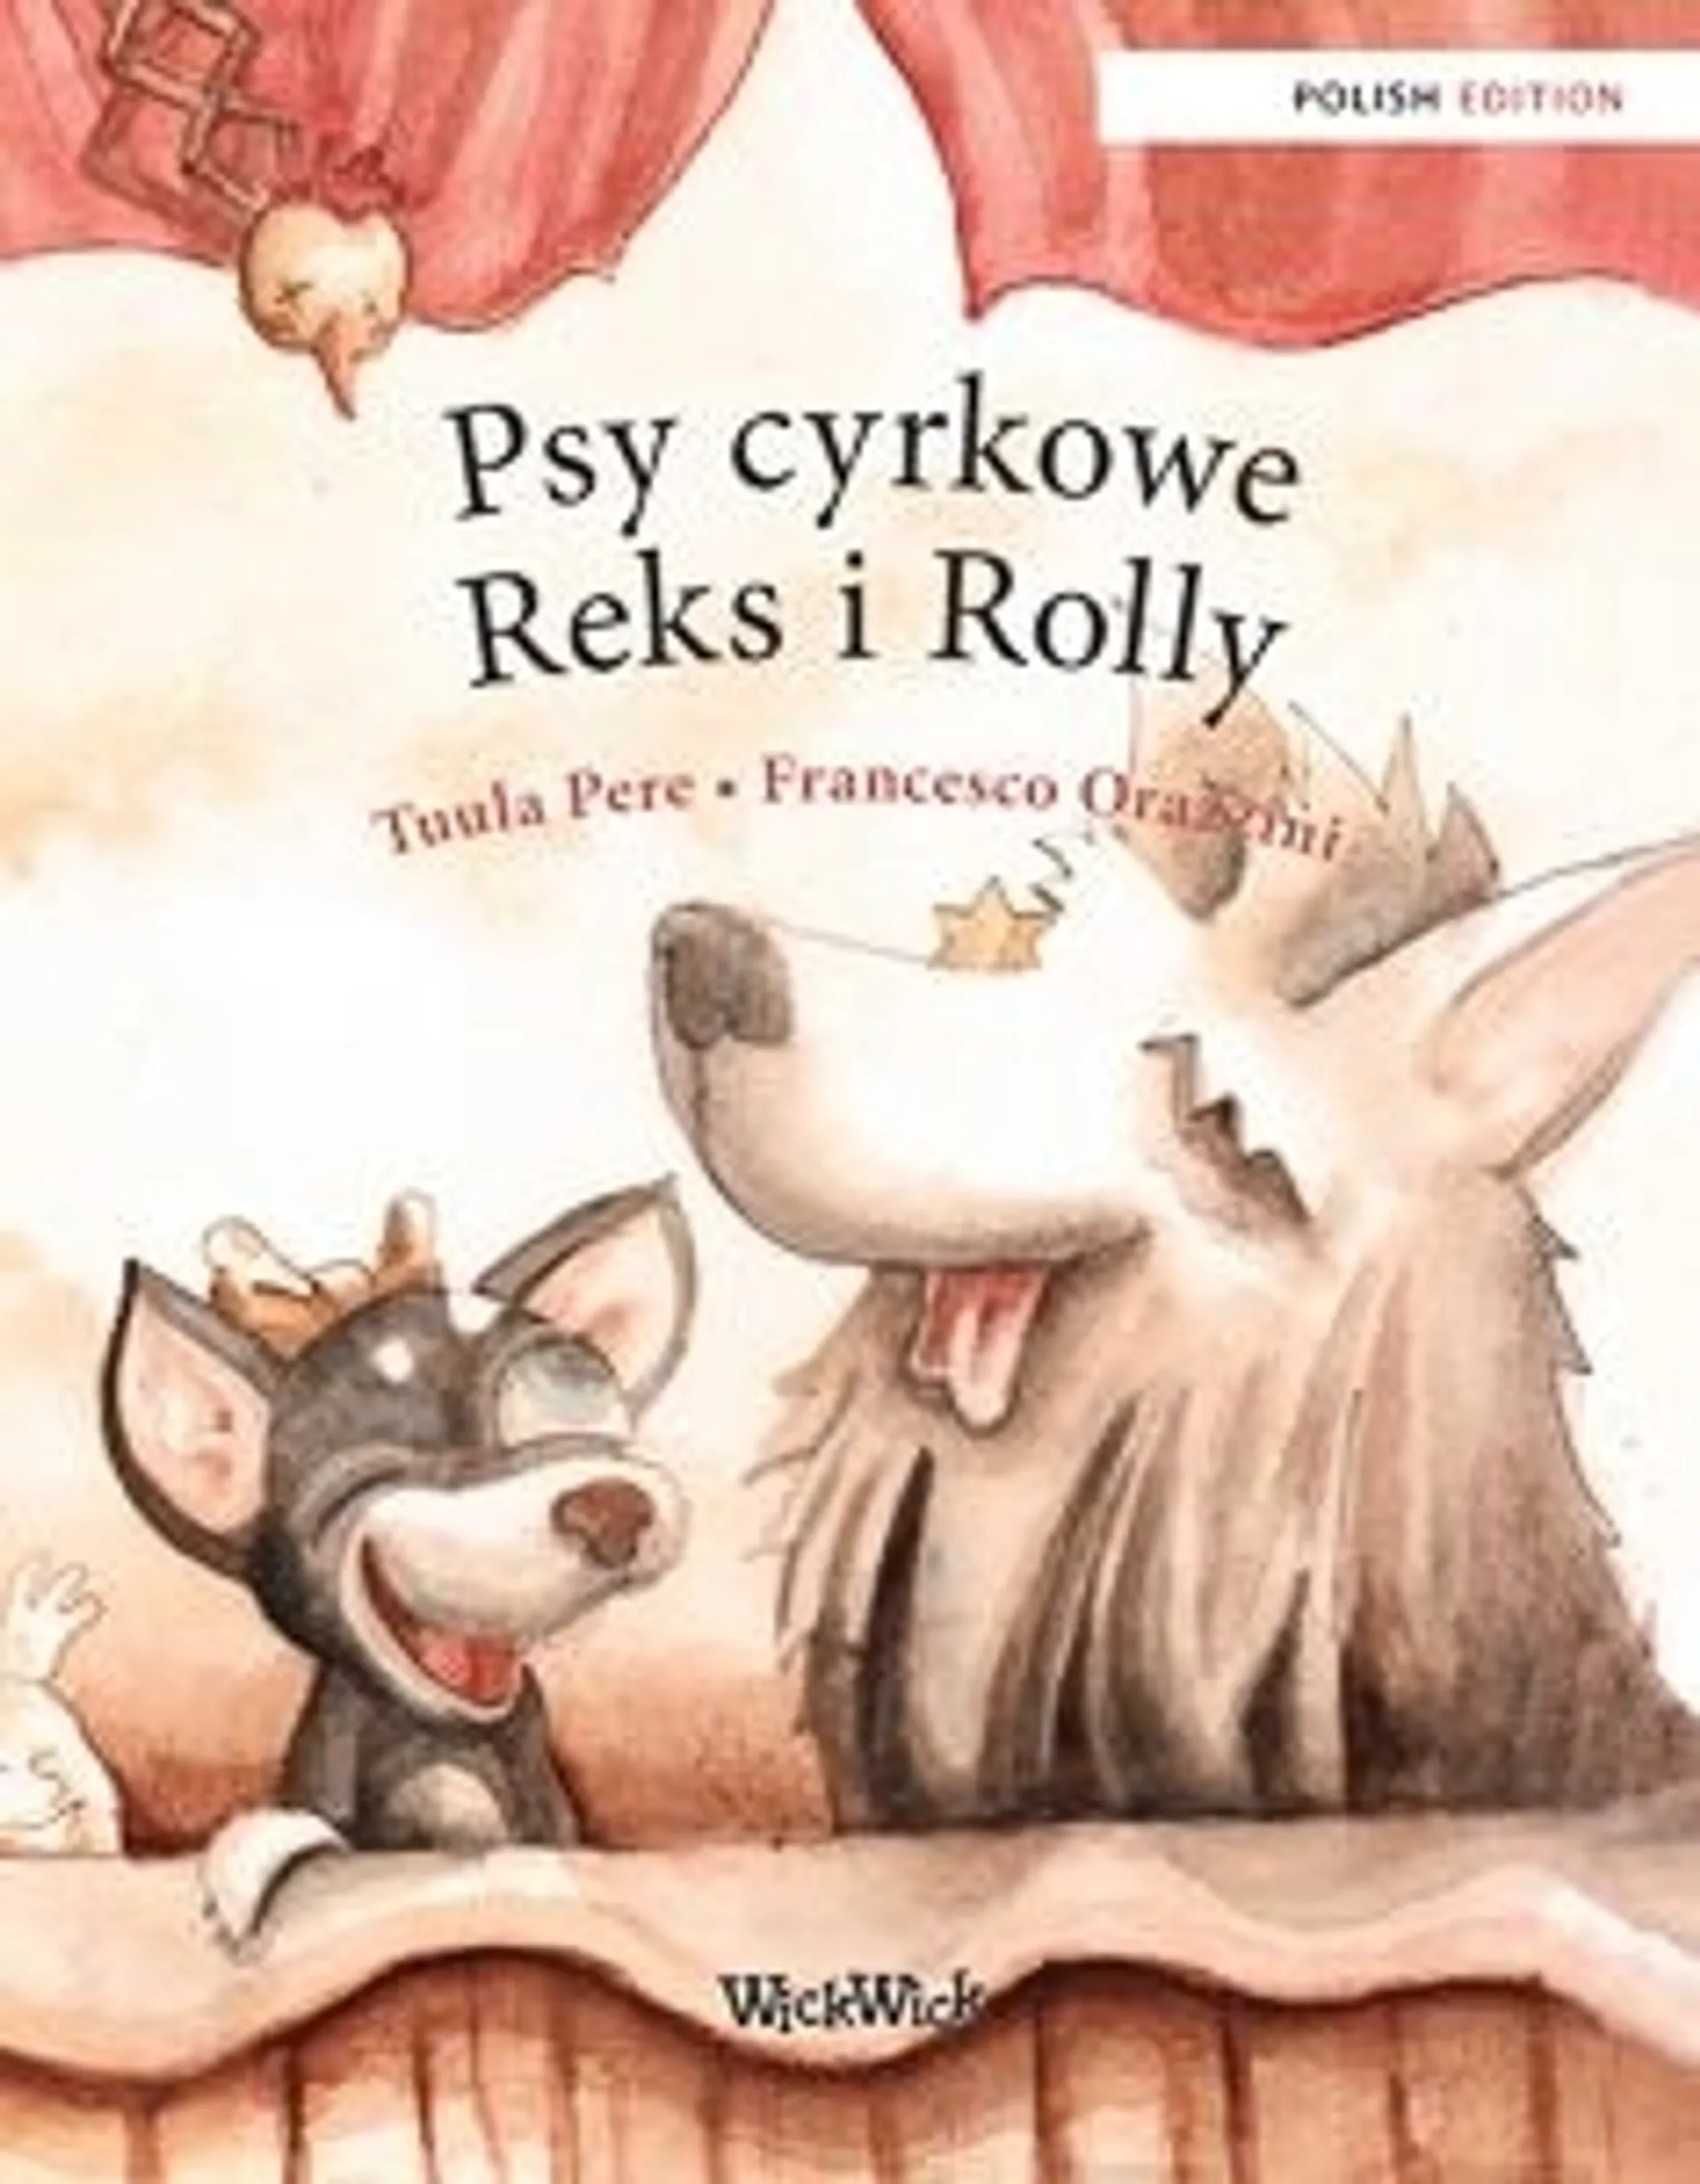 Pere, Psy cyrkowe Reks i Rolly